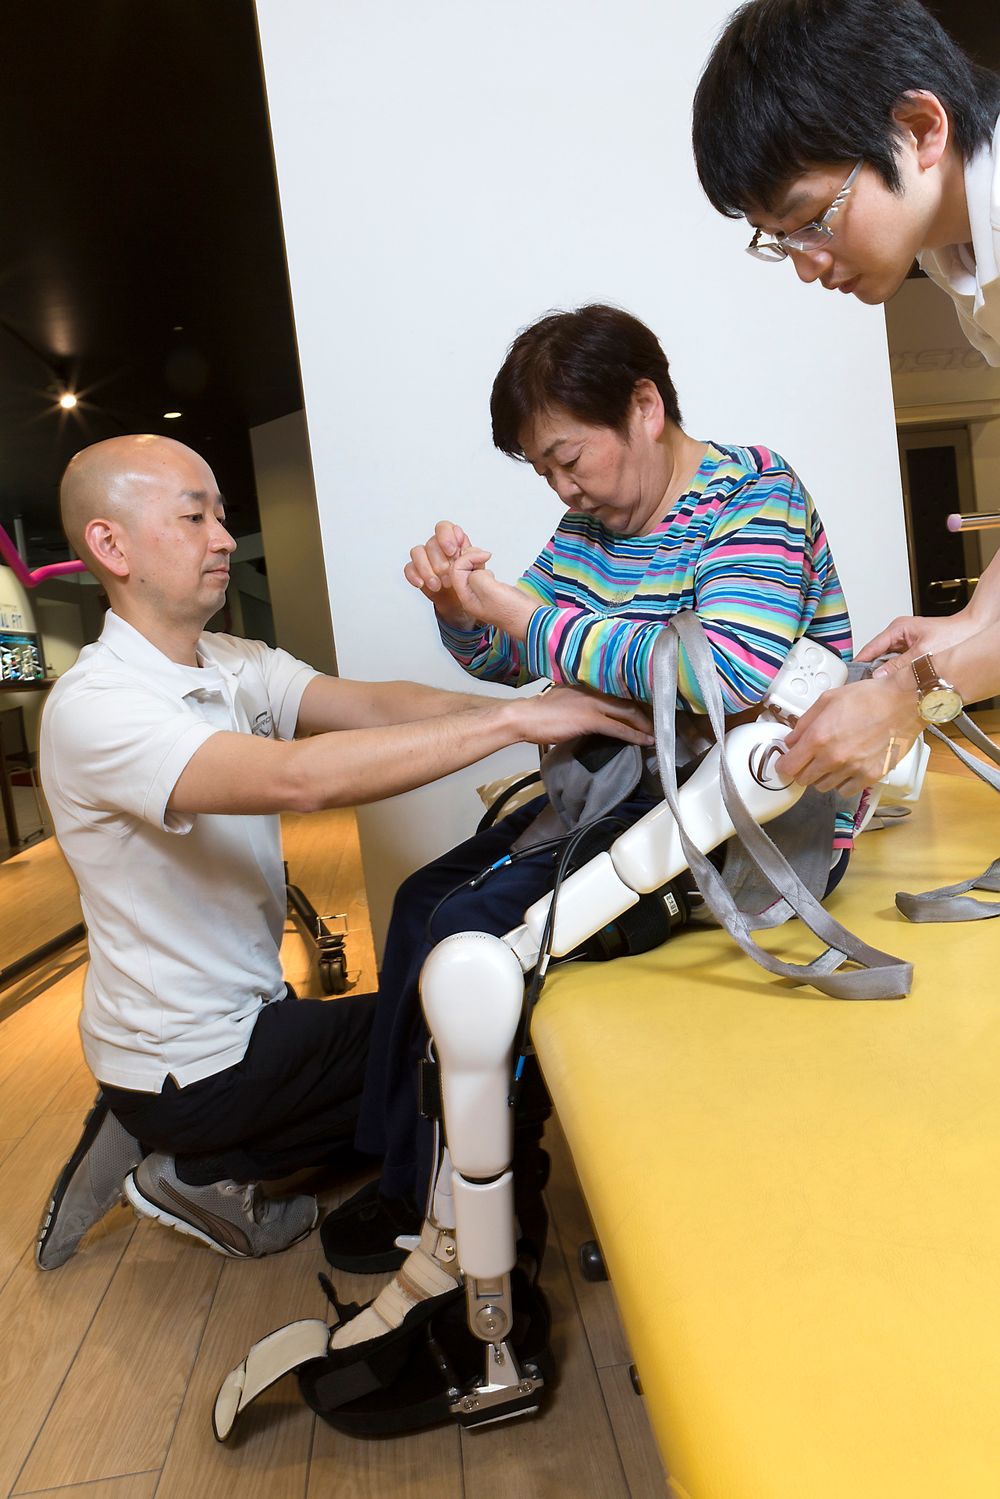 Hybrid Assistive Limb, Robot Suit HAL tillverkad av Cyberdyne, Japan NOT FOR COMMERCIAL USE UNLESS PRIOR AGREED WITH PHOTOGRAPHER. (Contact Christina Sjogren at email address : cs@christinasjogren.com )